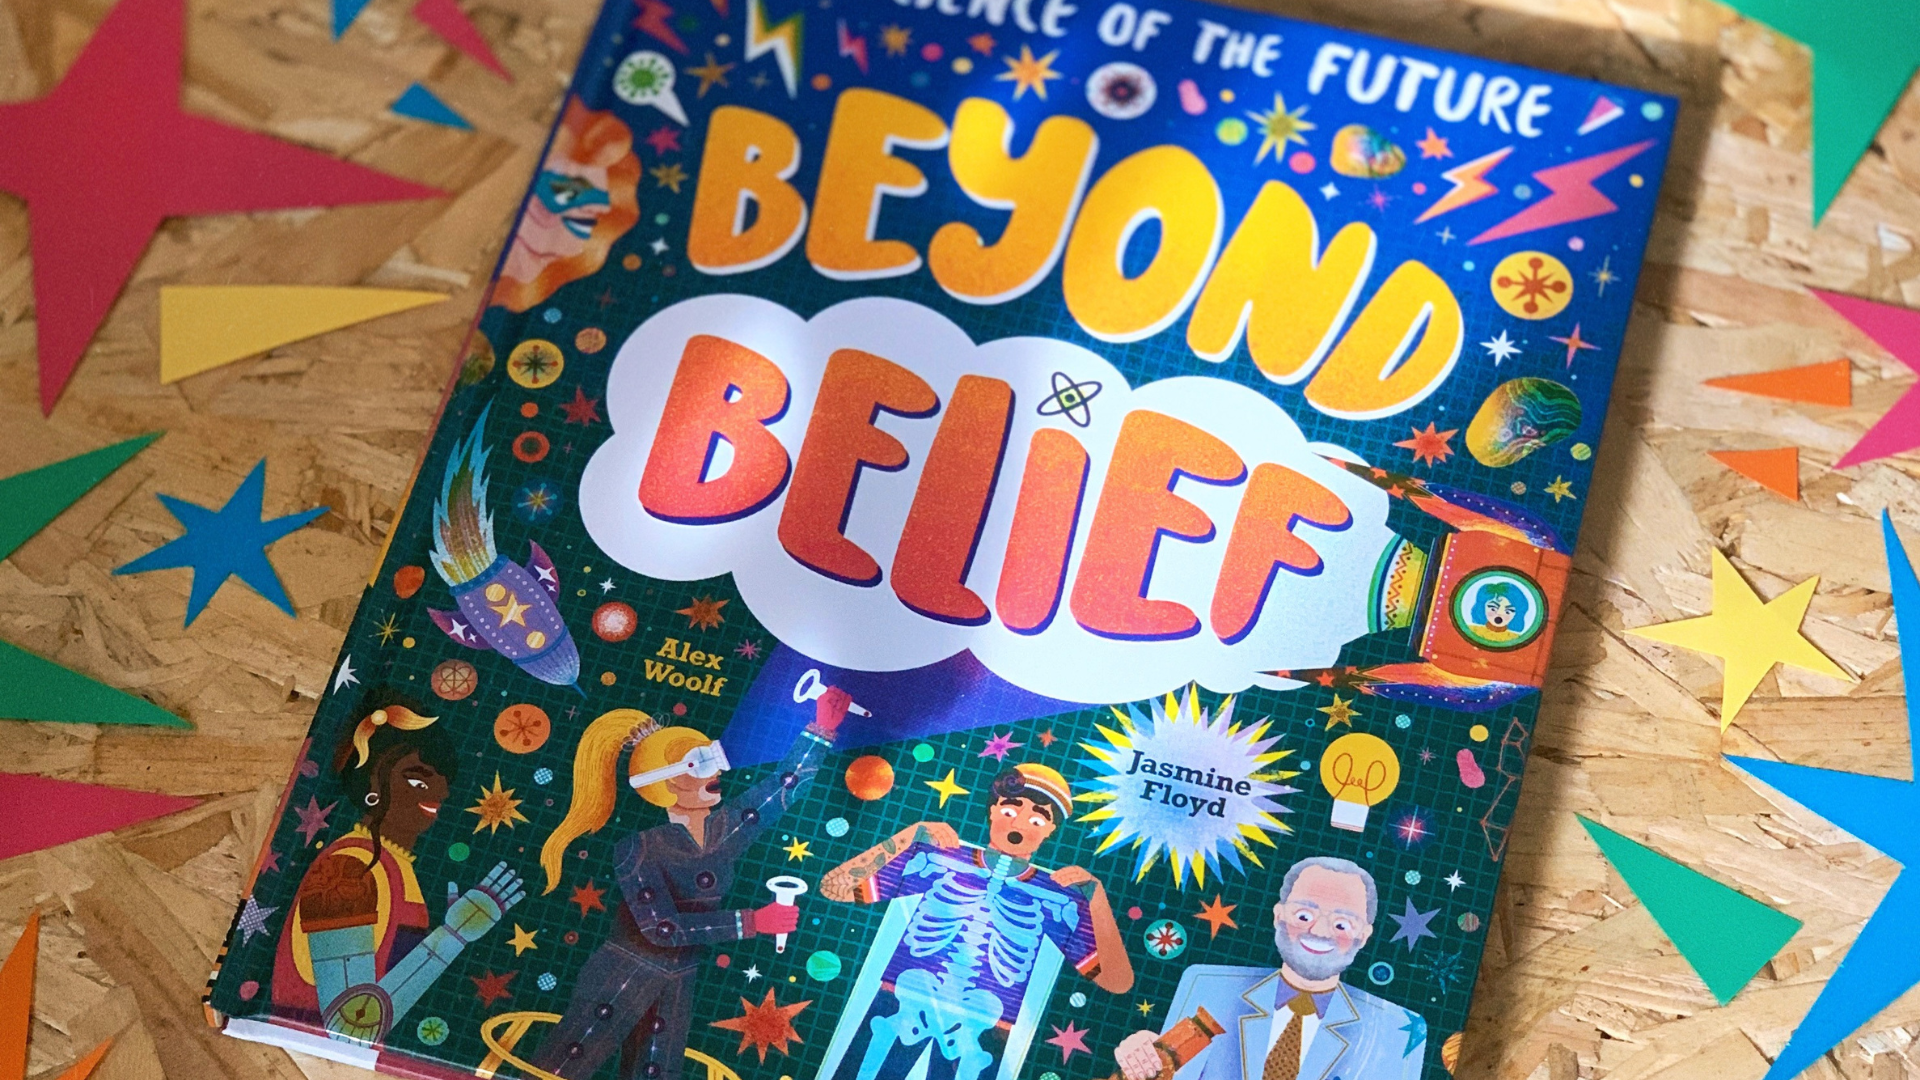 'Beyond Belief' a book by Alex Woolf and Jasmine Floyd